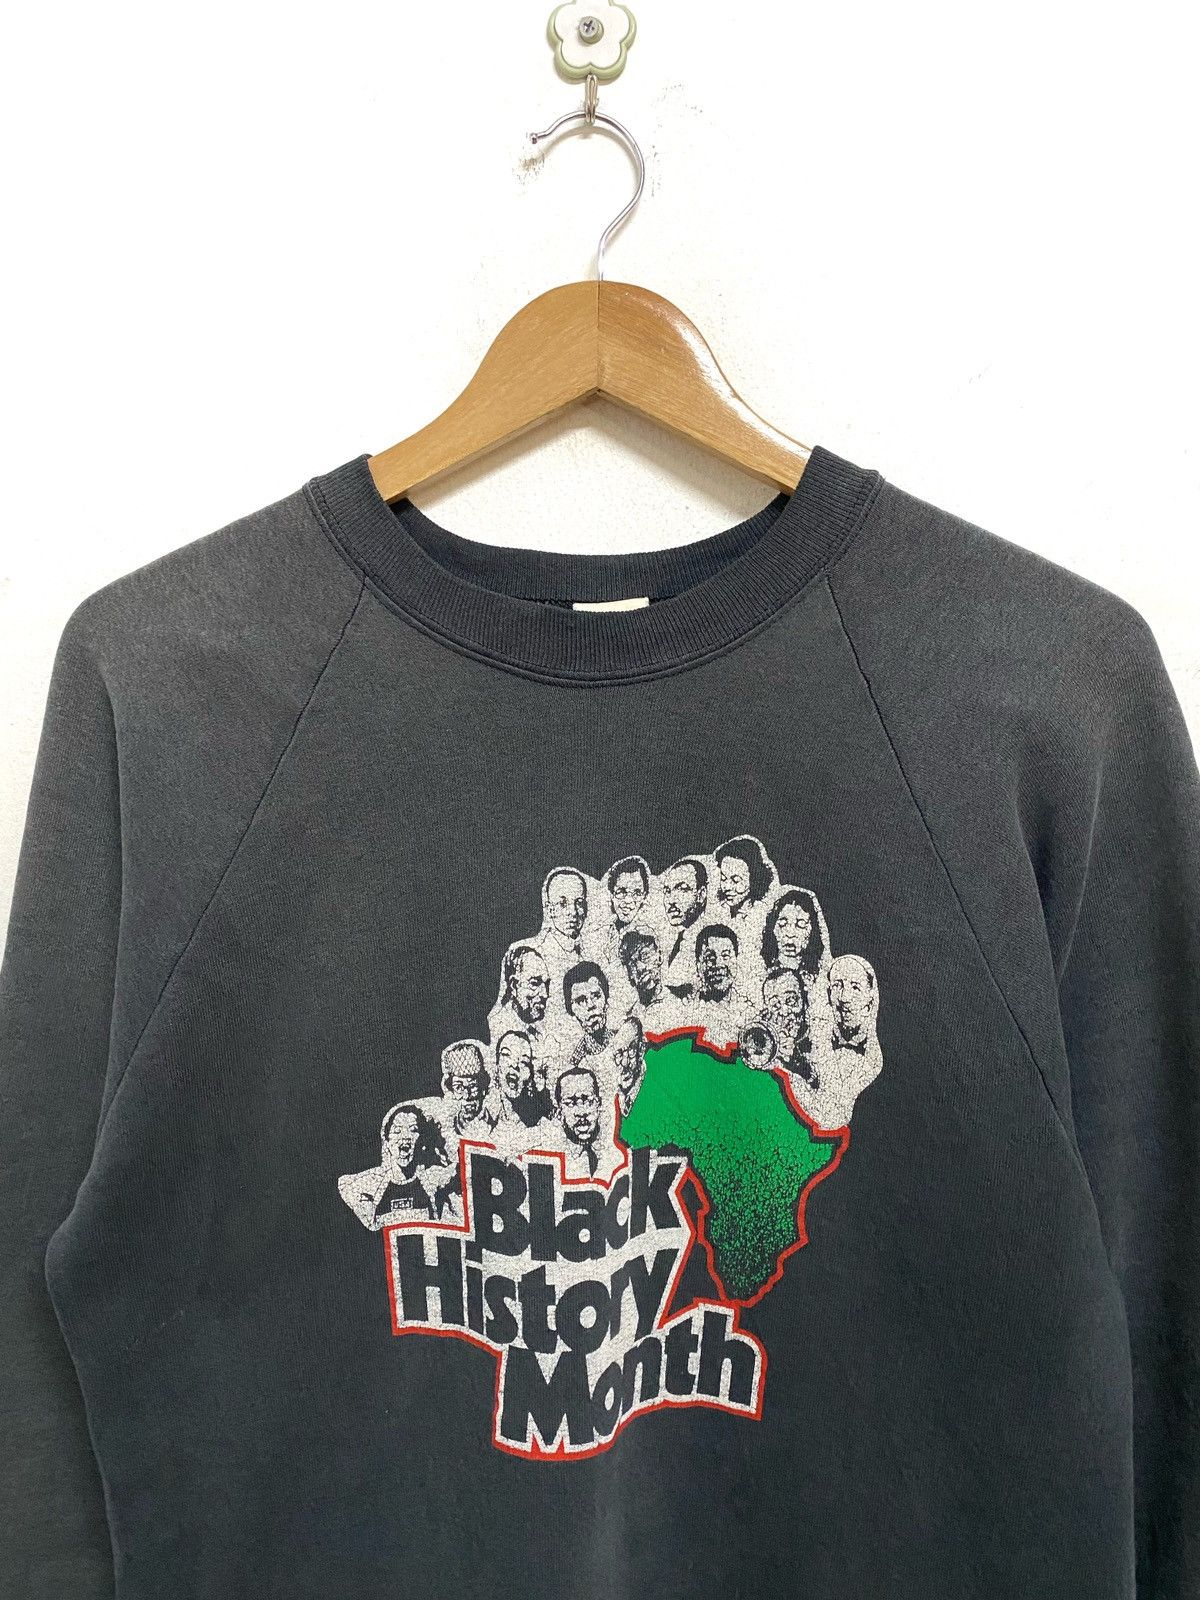 Vintage Black History Month Sweatshirt - 2